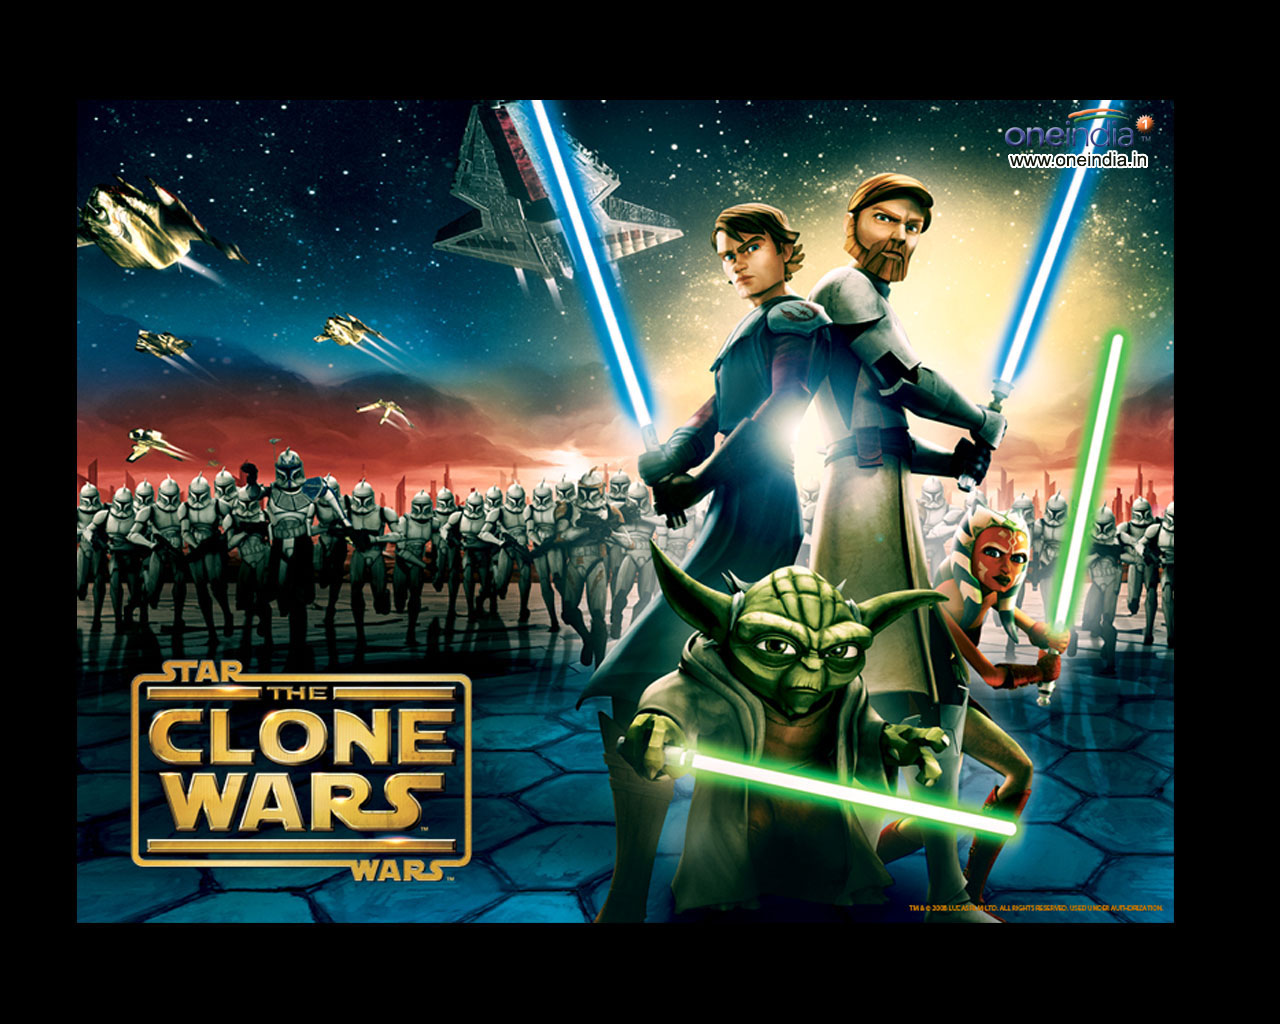 STAR WAR WALLPAPER: Star Wars The Clone Wars